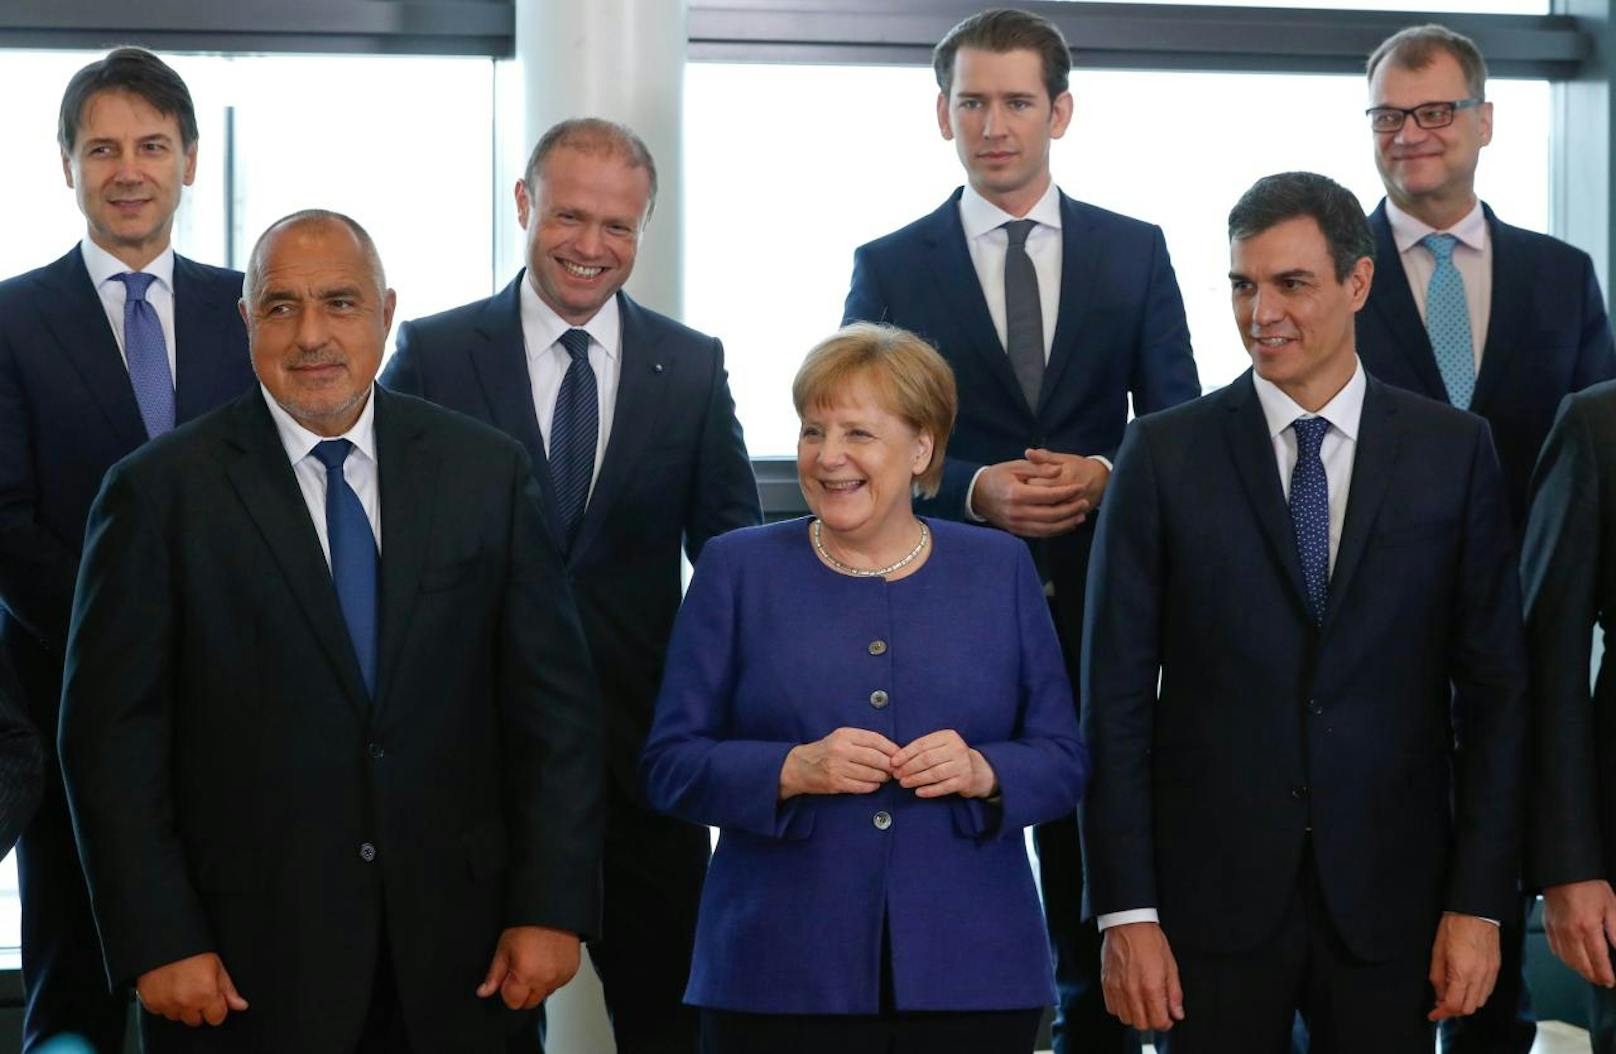 v.n.l.r.: Die Premiers und Kanzler <b>Giuseppe Conte</b> (italien), <b>Bojko Borissow</b> (Bulgarien), <b>Joseph Muscat </b>(Malta), <b>Angela Merkel</b> (Deutschland), <b>Sebastian Kurz</b>, <b>Pedro Sanchez</b> (Spanien) und <b>Juha Silipa</b> (Finnland).